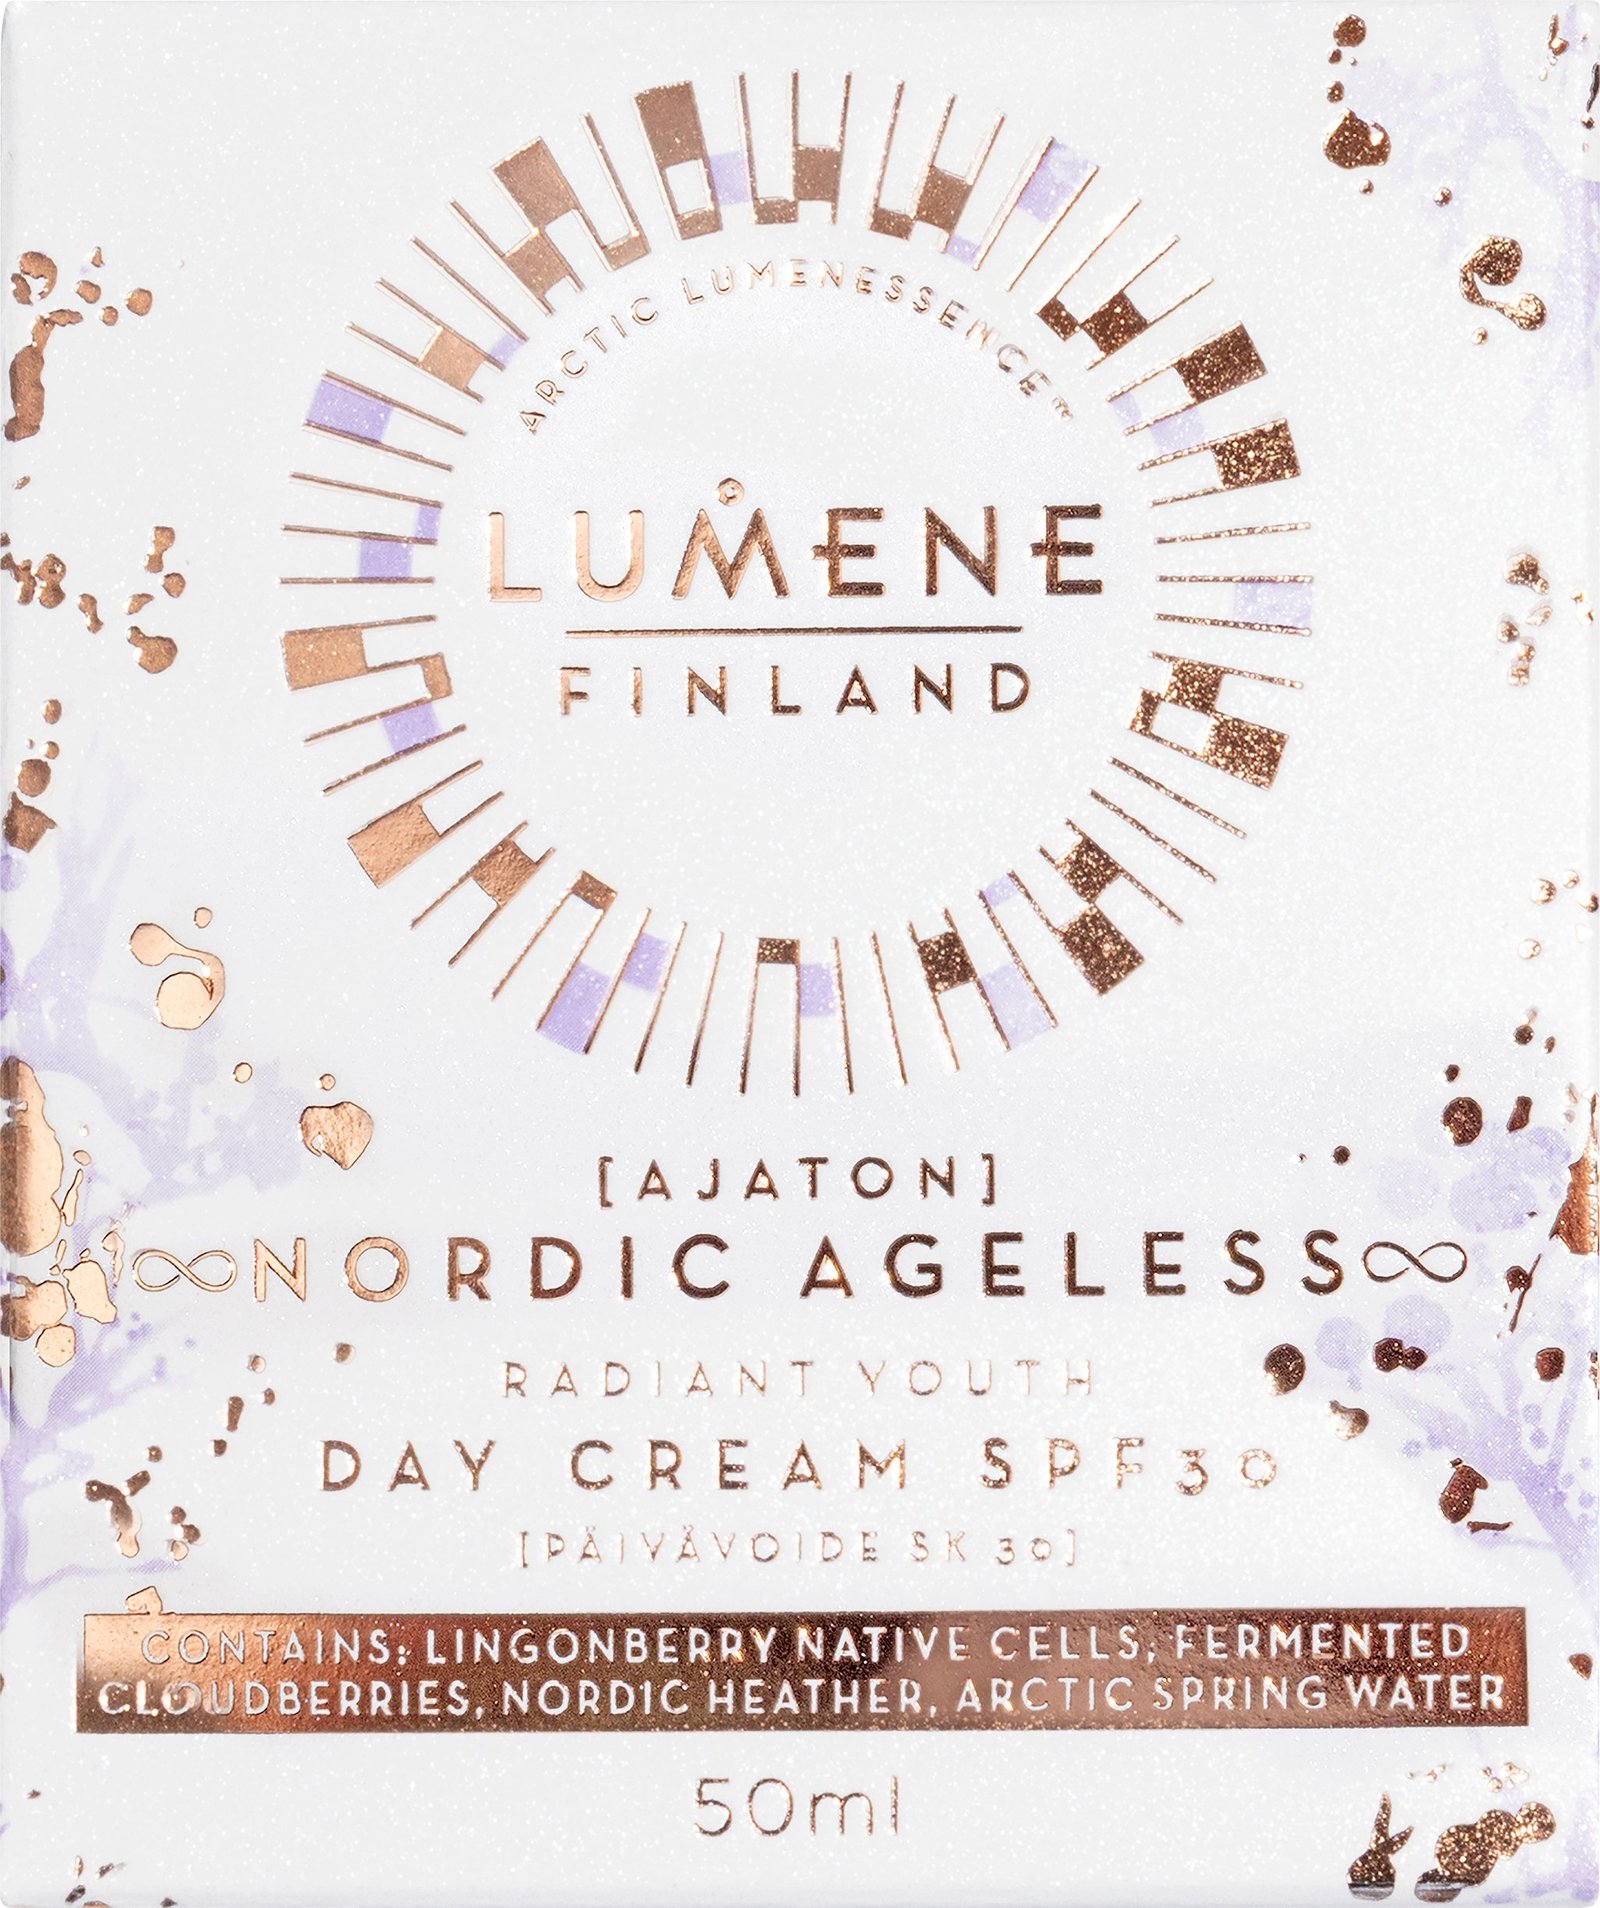 Lumene Ajaton Nordic Ageless Day Cream Spf30 50 ml